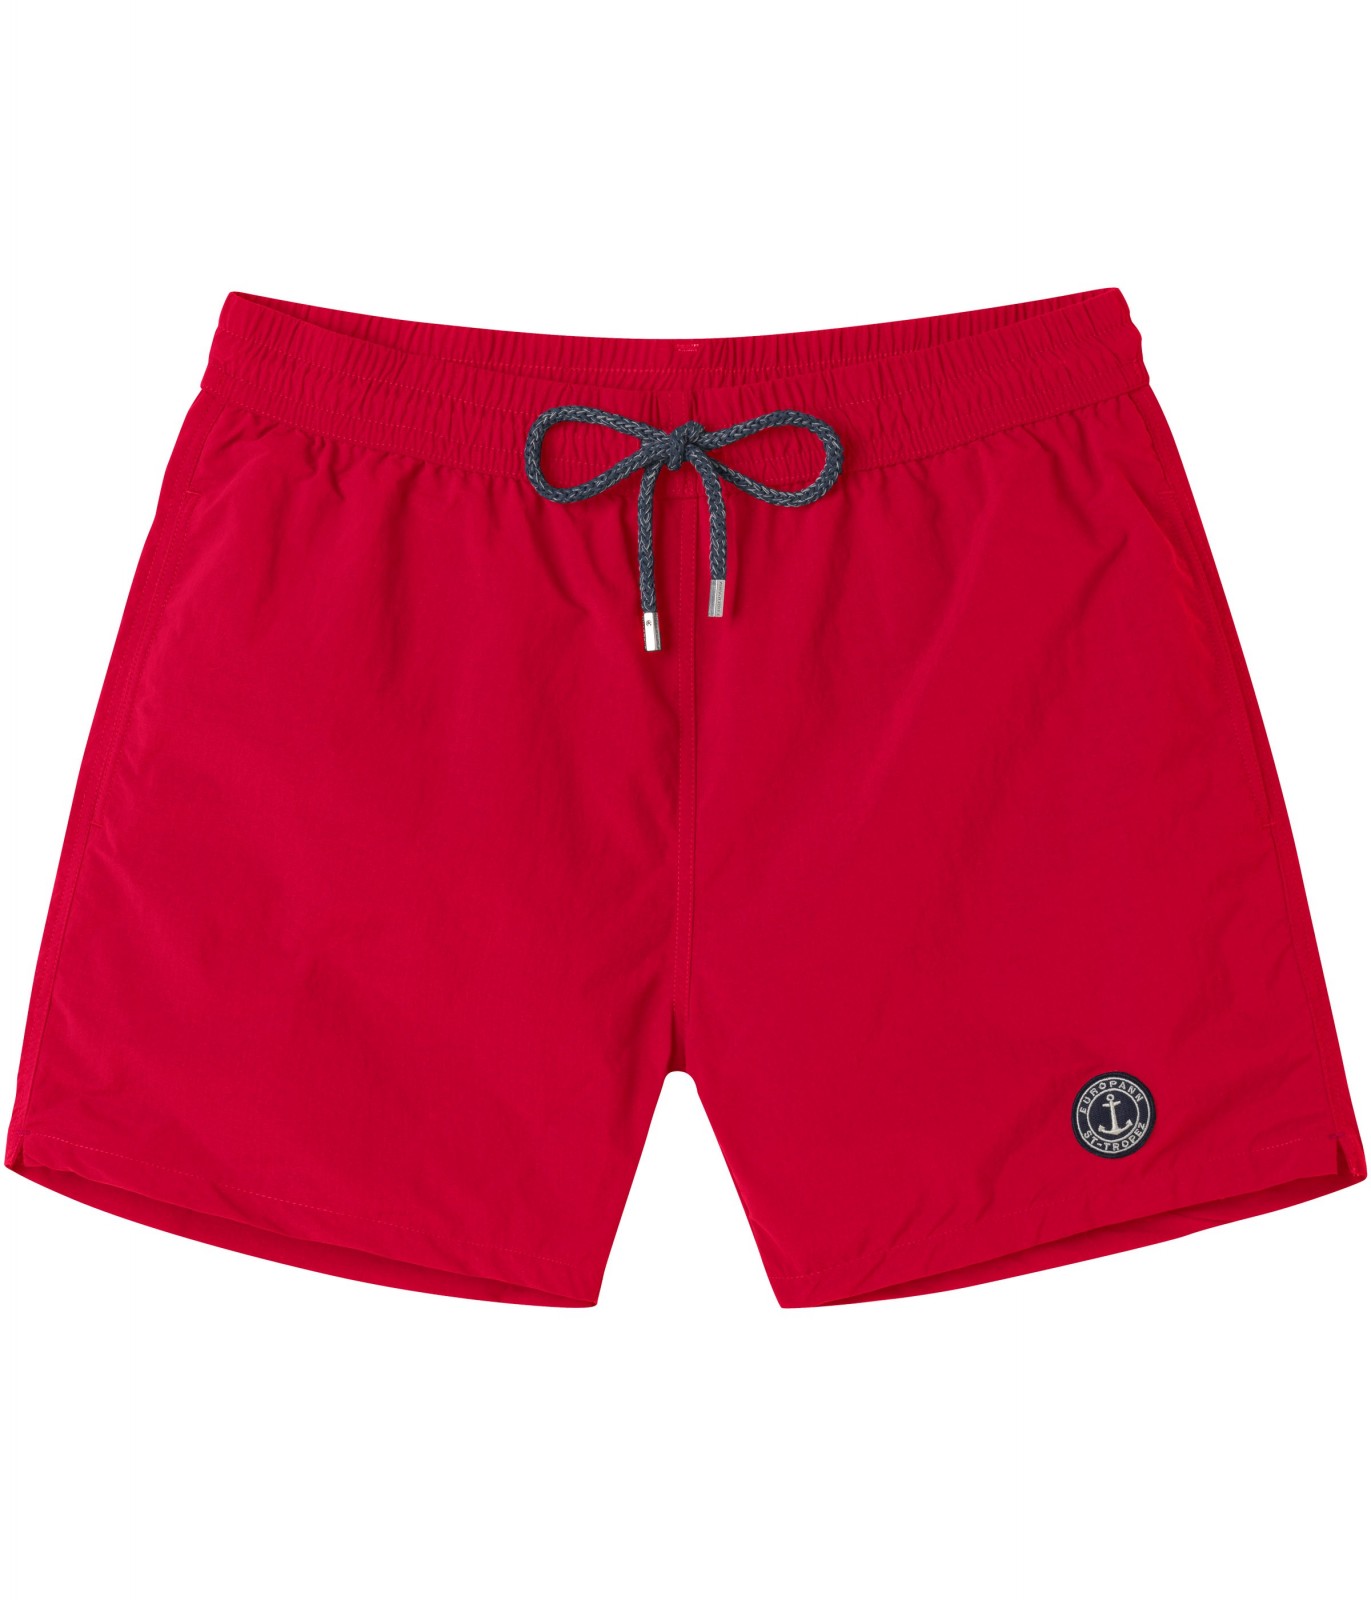 https://www.europann.com/5625-thickbox_default/soft-plain-red-swim-shorts.jpg